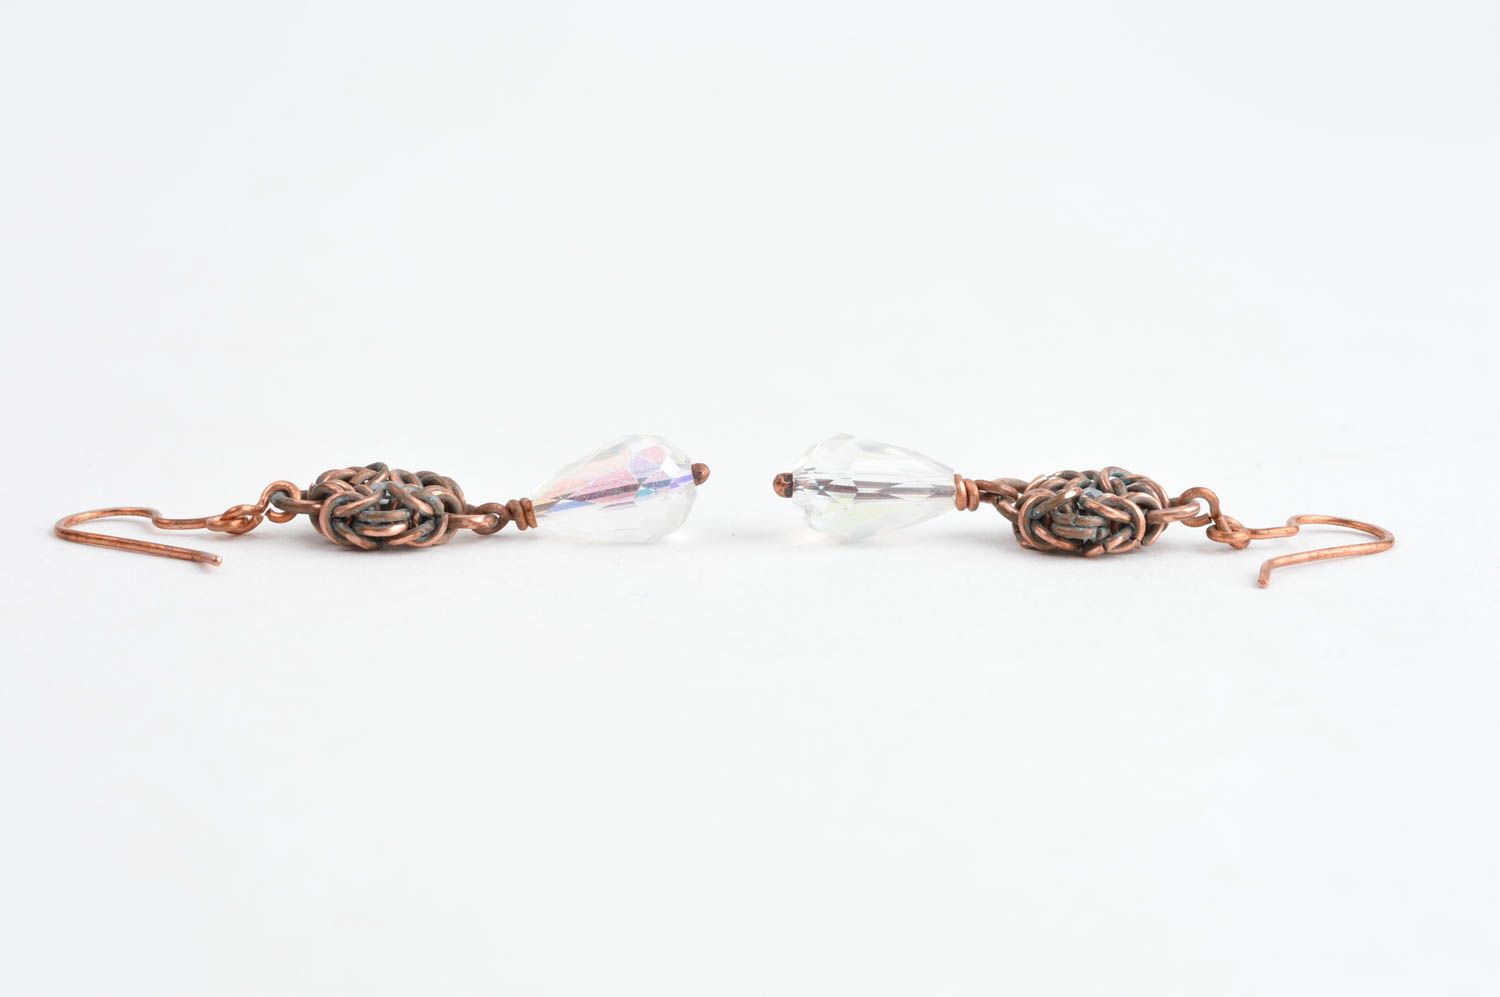 Copper earrings handmade wire wrap earrings metal earrings with charms for girls photo 2